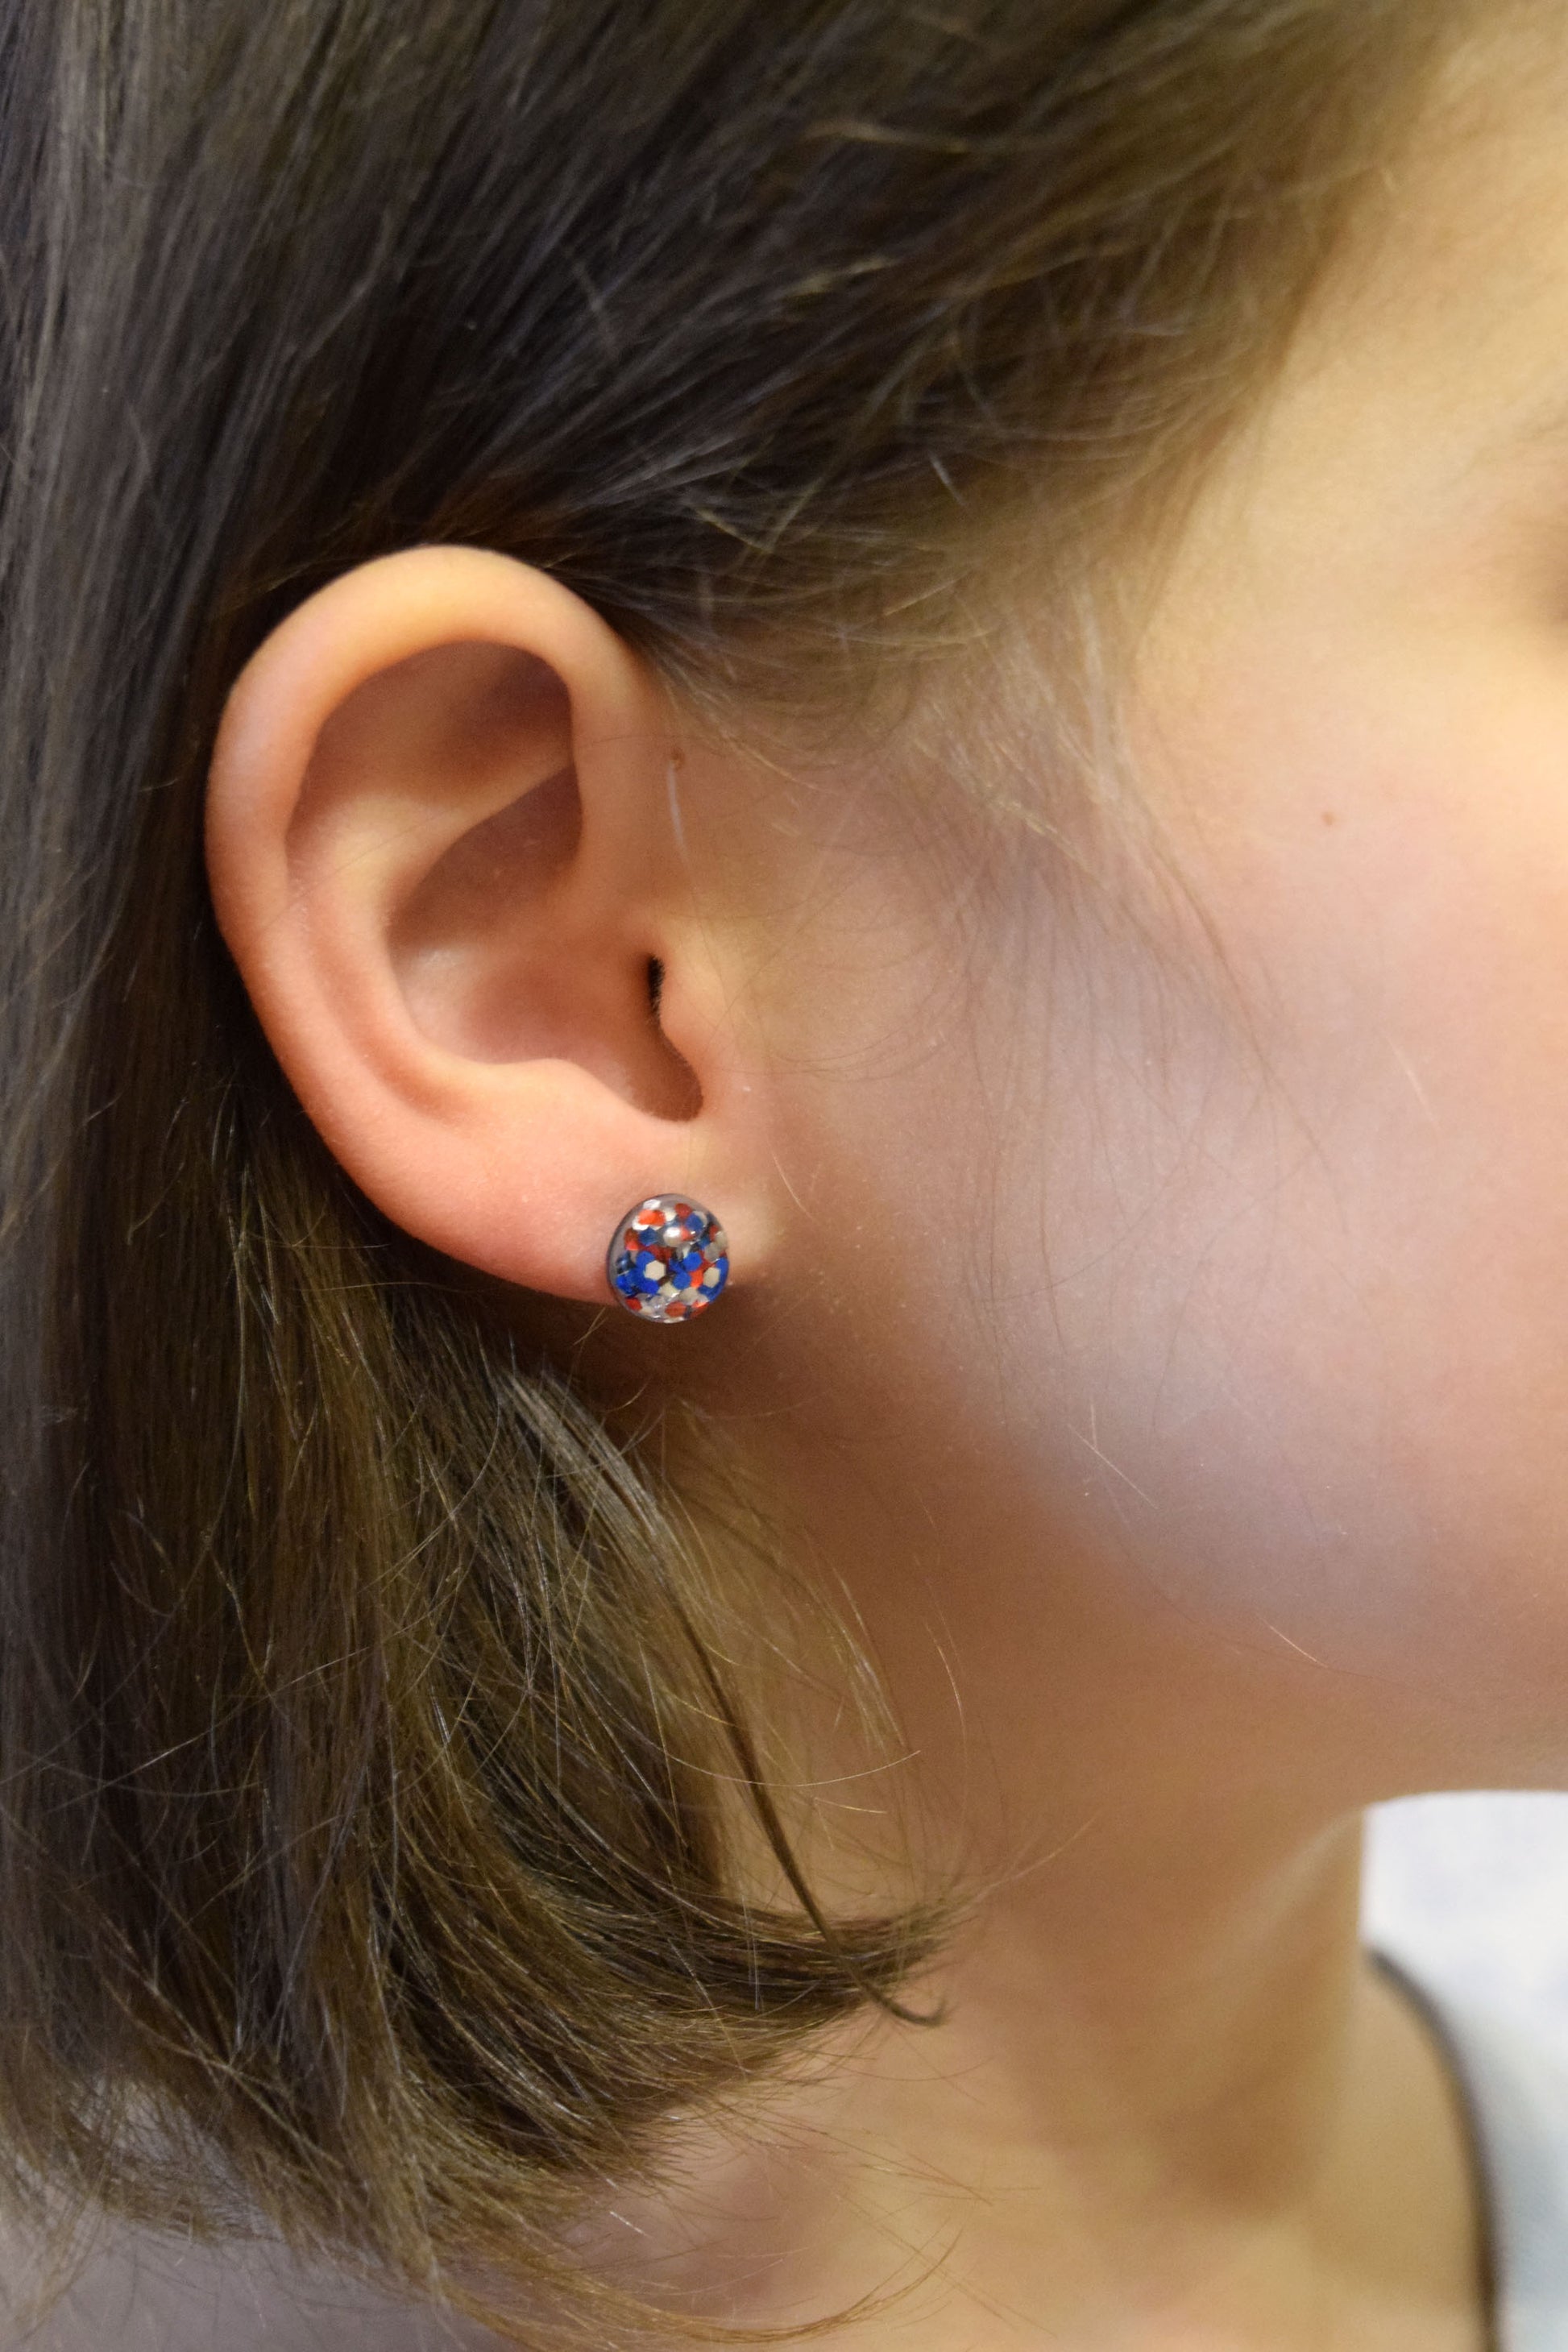 Saint earrings for kids, small catholic earrings